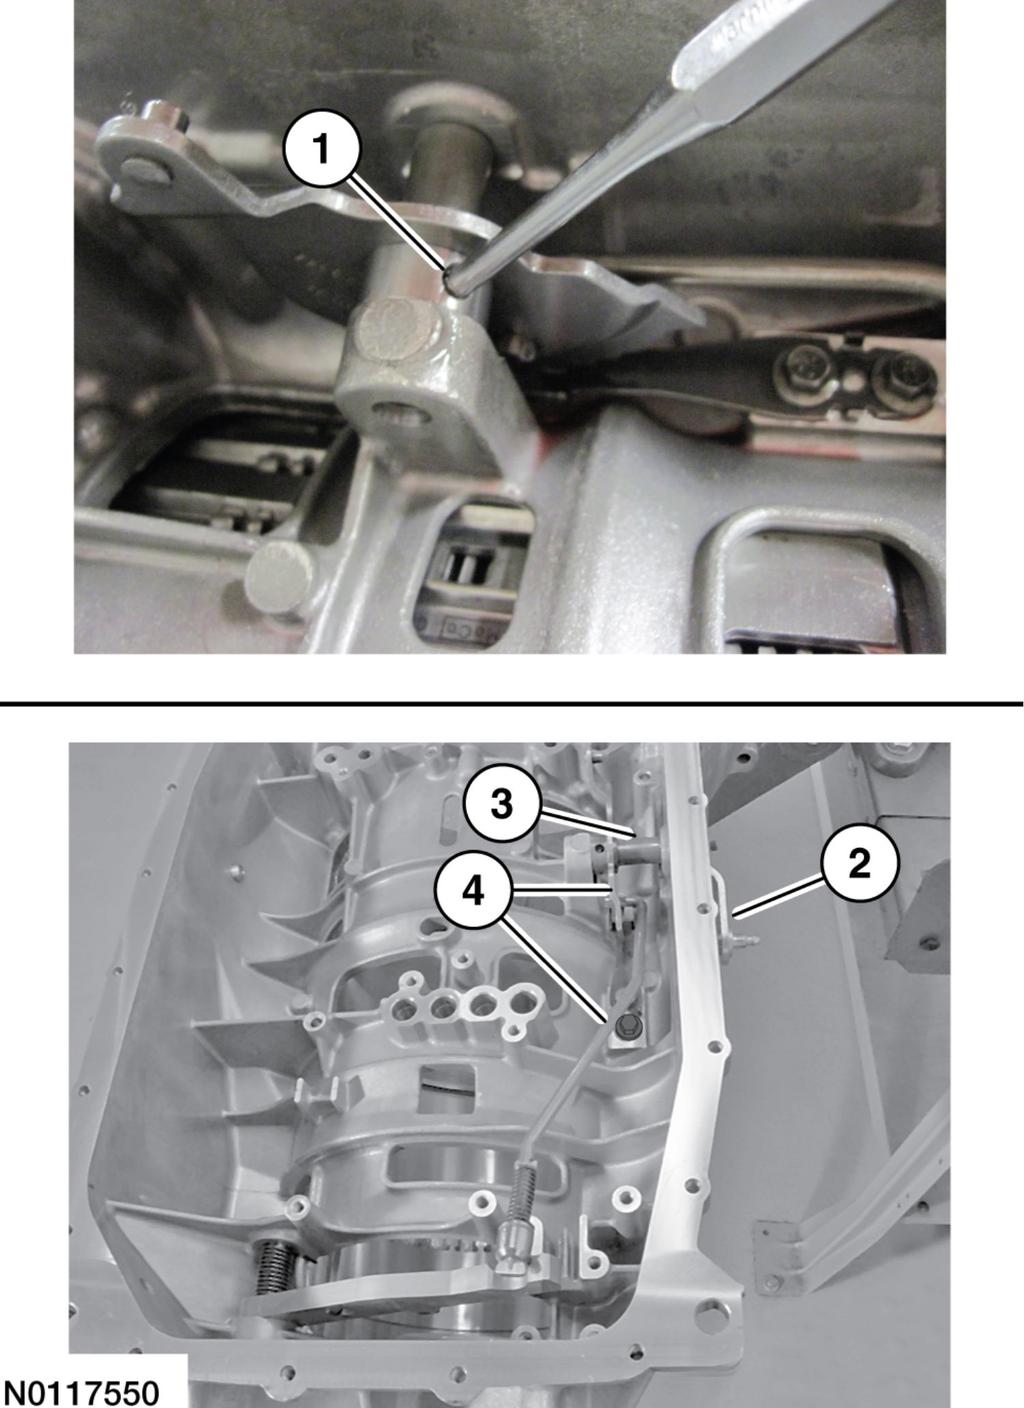 307-01-18 Automatic Transaxle/Transmission 6R80 307-01-18 4 Remove the manual valve detent